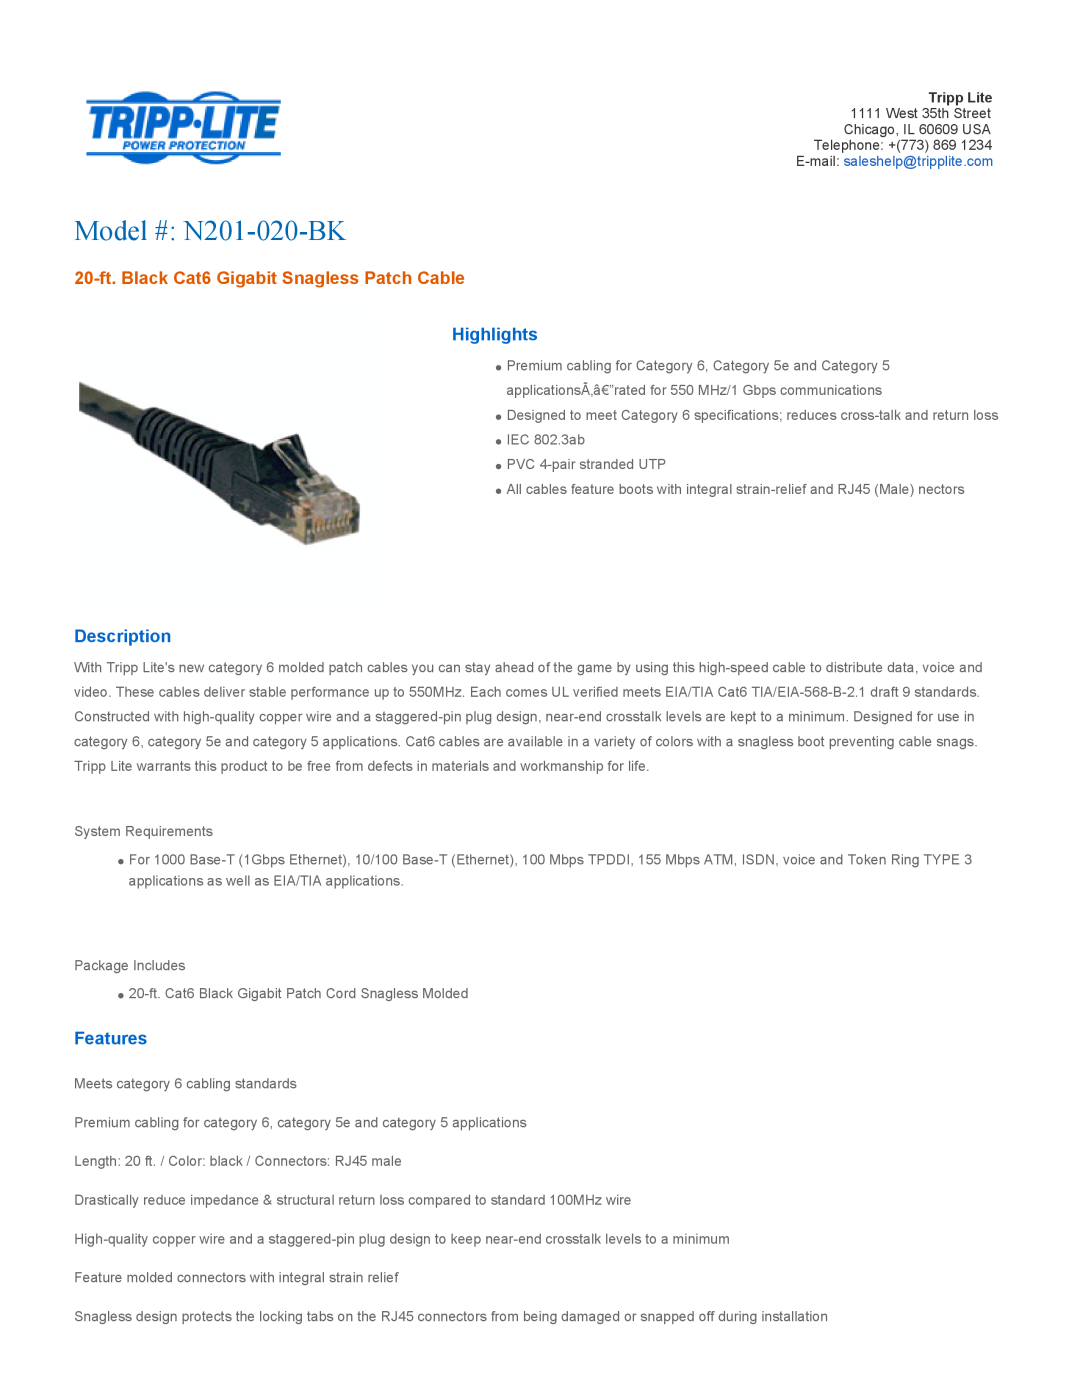 Tripp Lite specifications Highlights, Description, Features, Model # N201-020-BK 